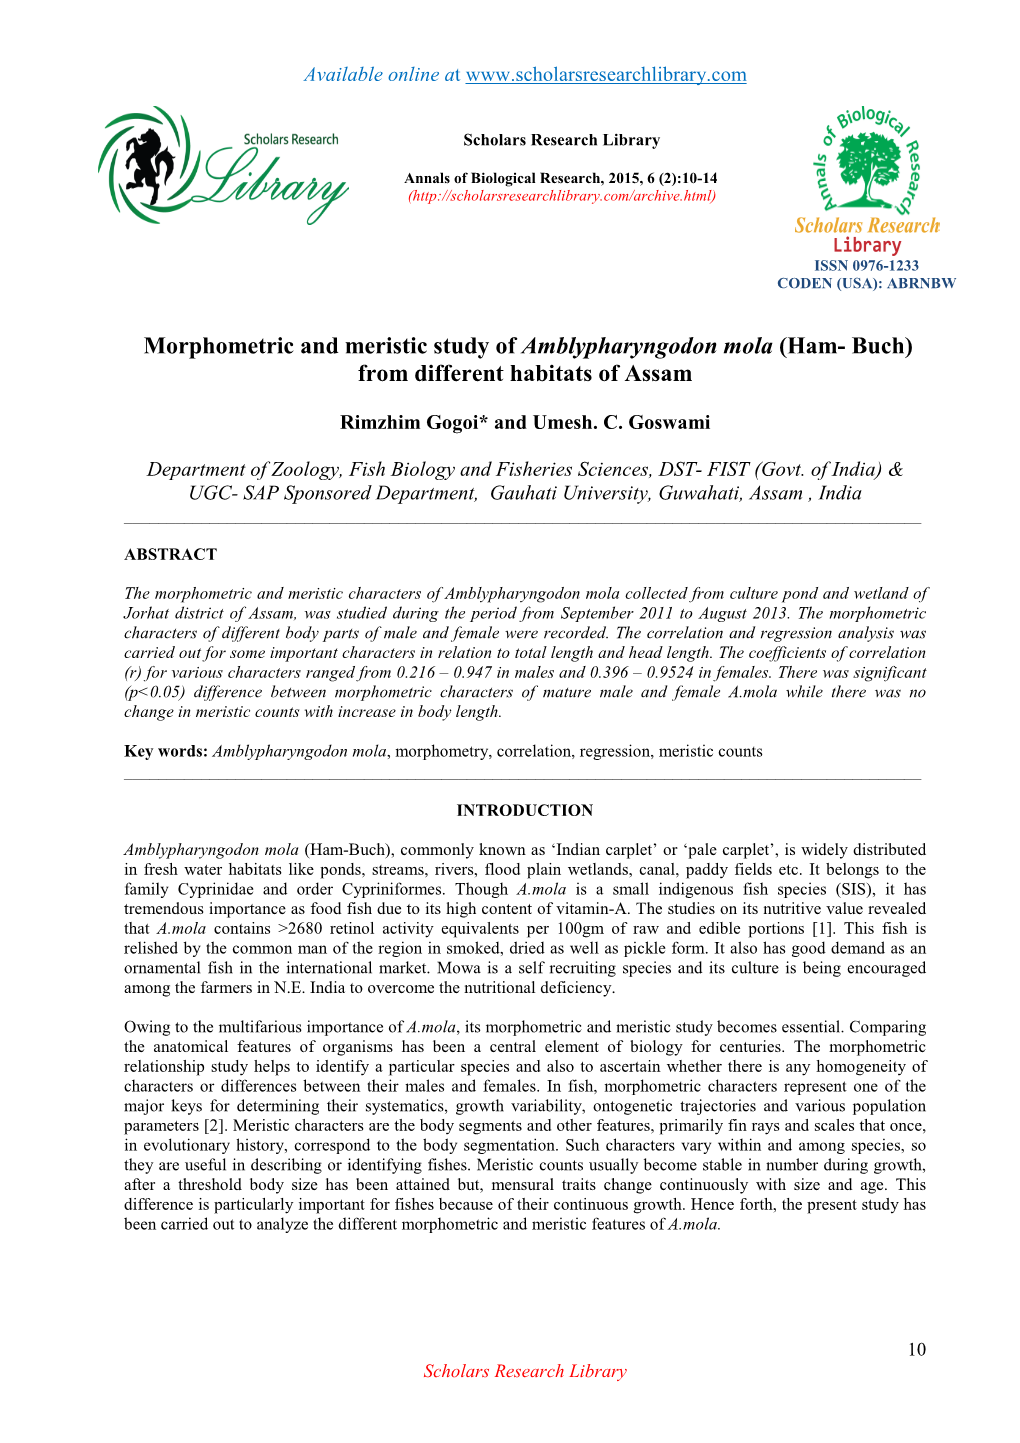 Morphometric and Meristic Study of Amblypharyngodon Mola (Ham- Buch) from Different Habitats of Assam